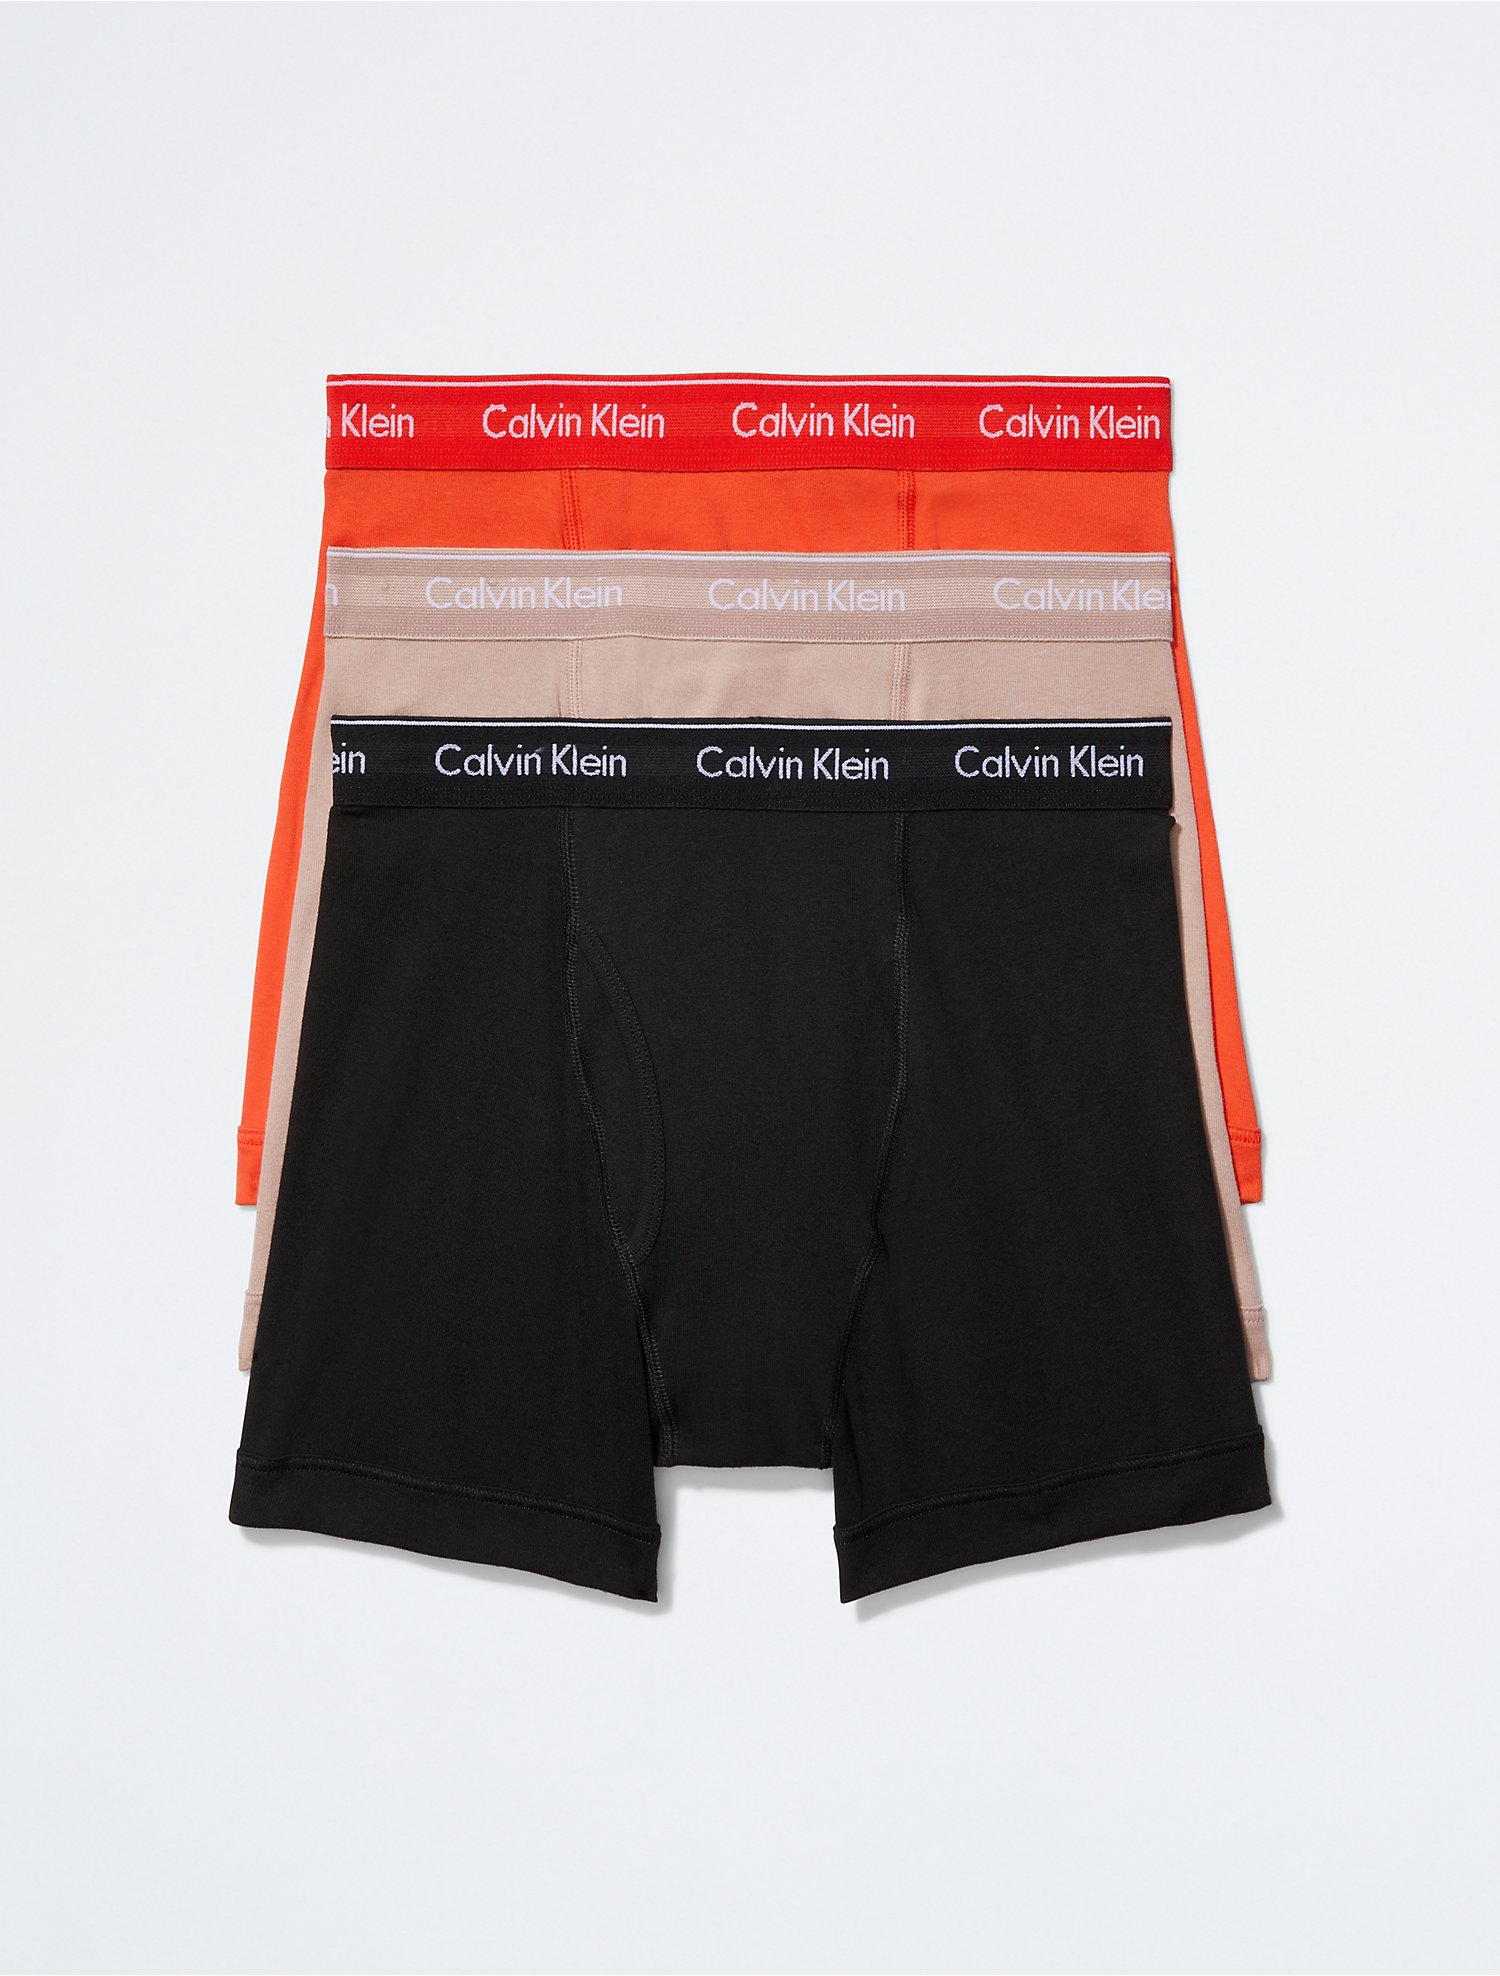 Verhandeling R seksueel Cotton Classics 3-Pack Boxer Brief | Calvin Klein